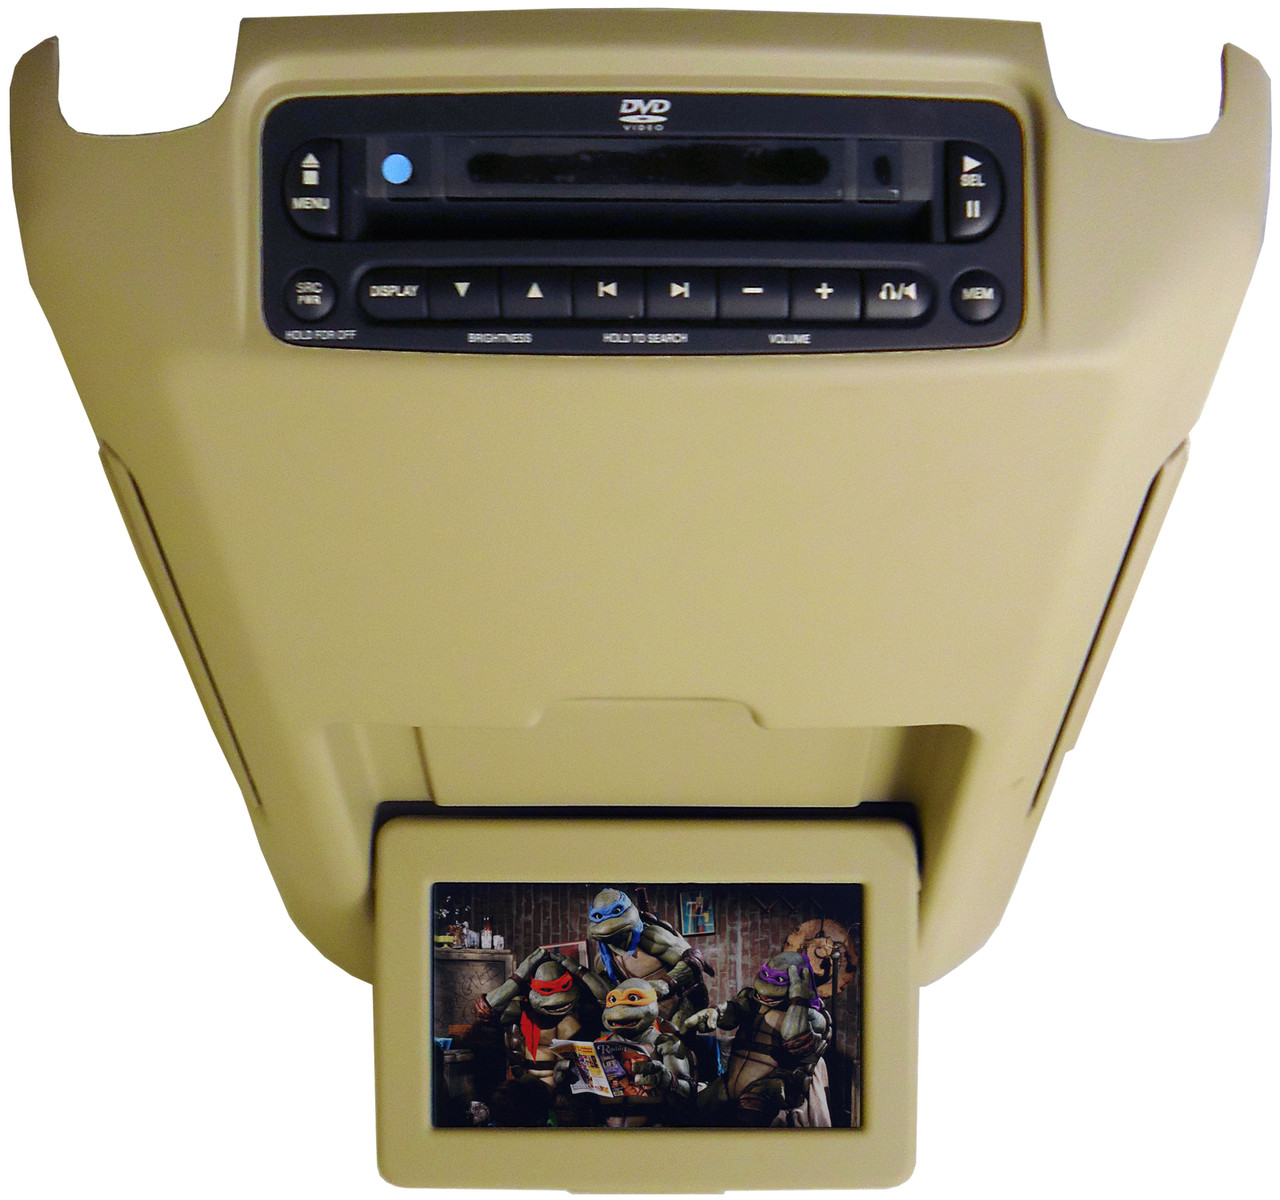 2005 Ford 150 overhead rail dvd system #6